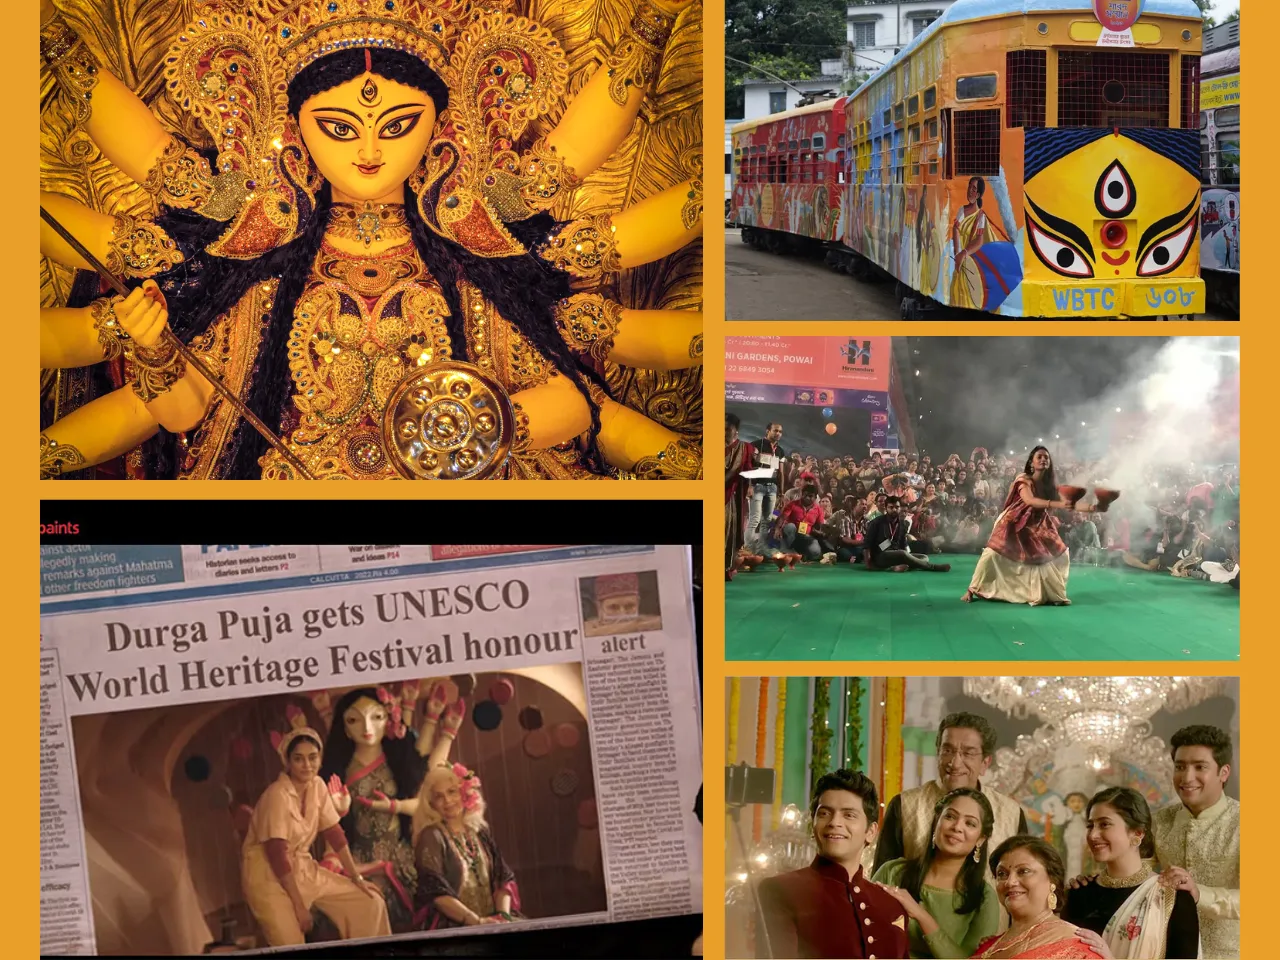 Inside the grandeur of Durga Pujo marketing fare